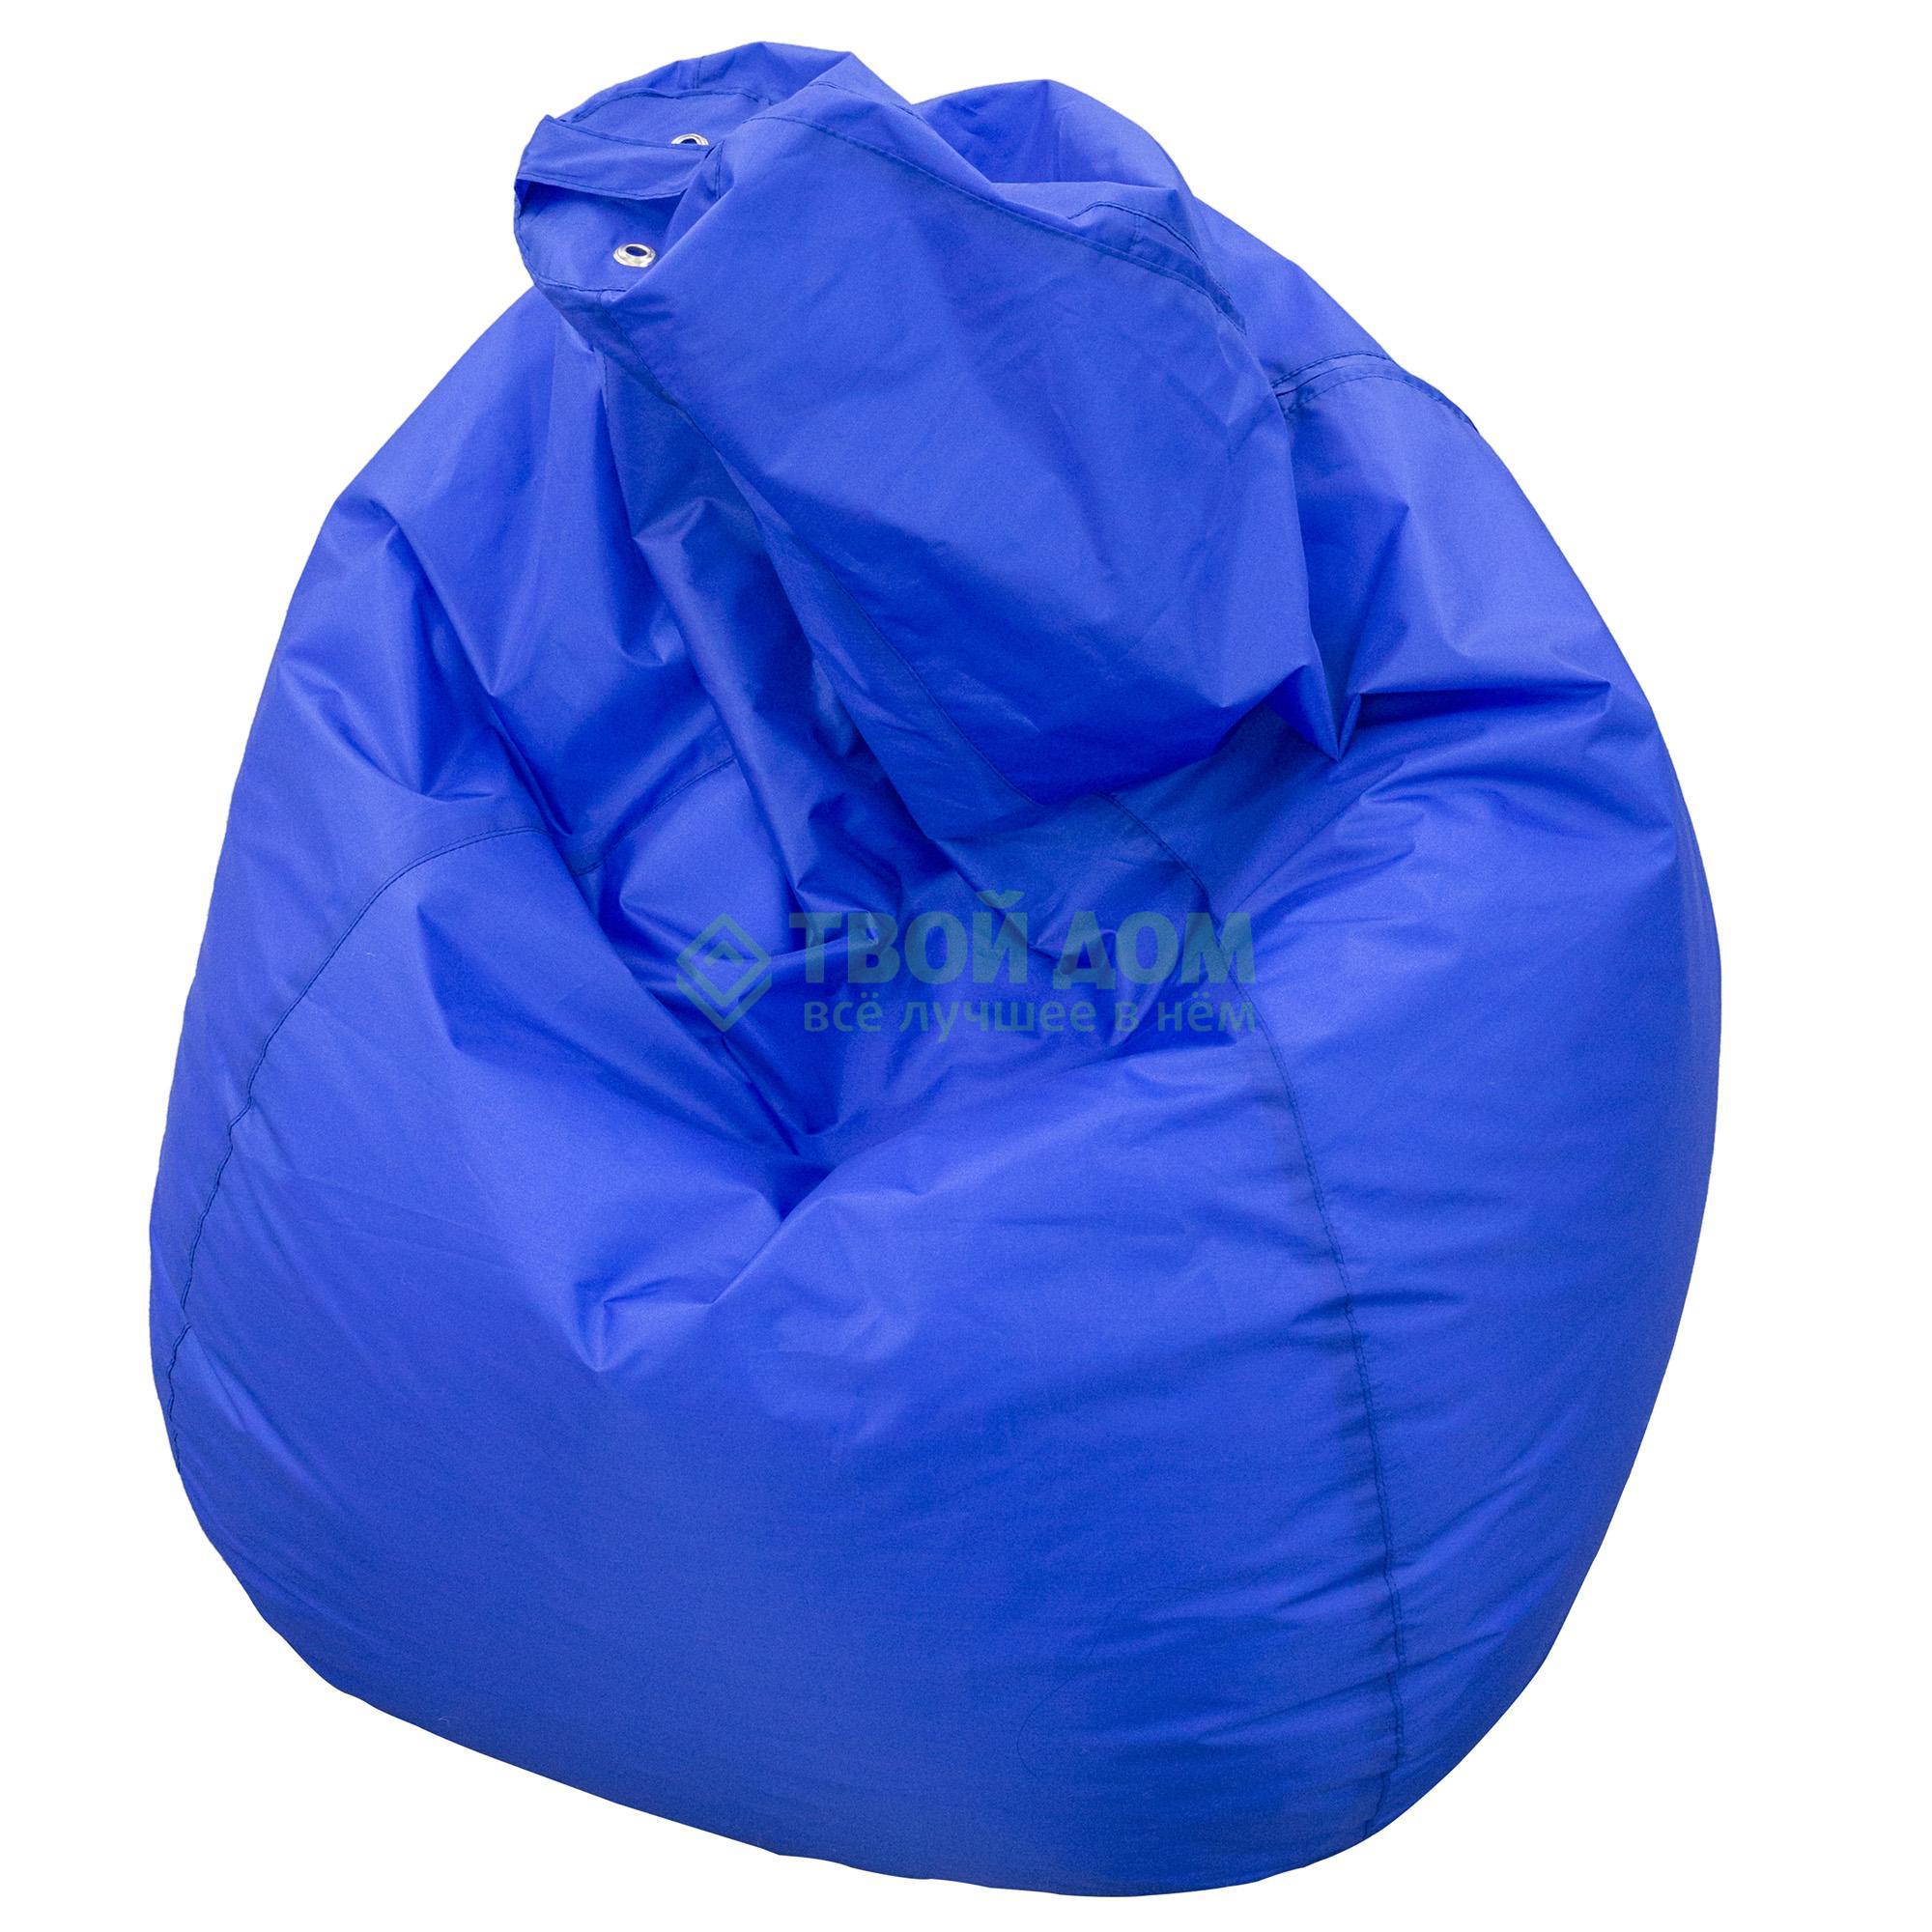 Кресло-мешок Dreambag Василек, цвет синий, размер 80х80х110 см - фото 1